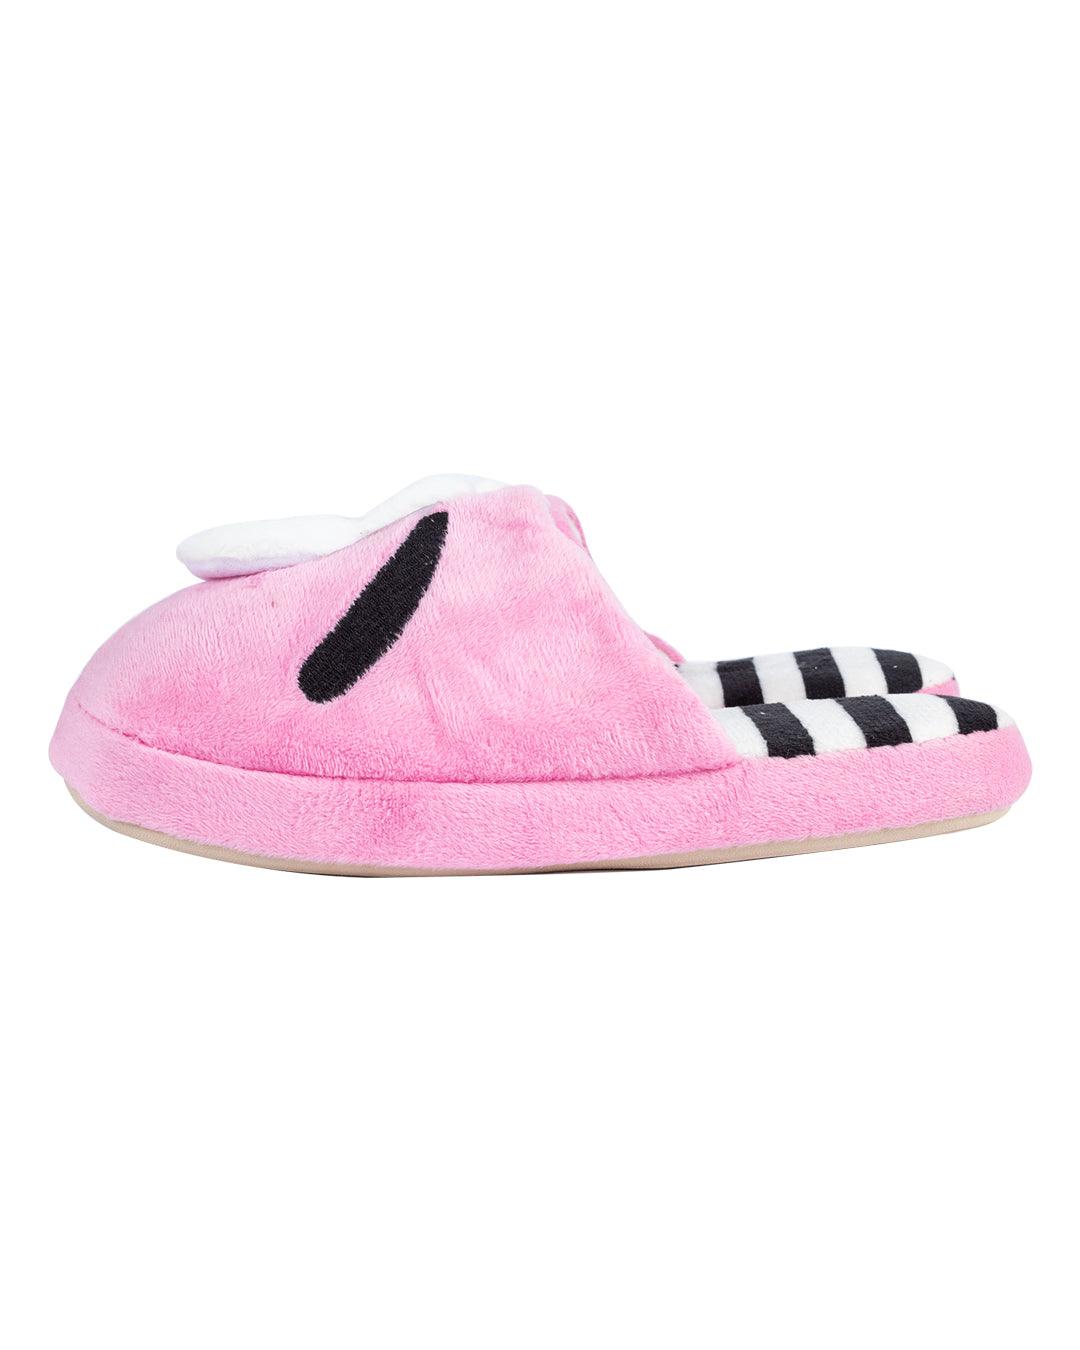 Donati Bedroom Slippers, Dog Print, Pink, Polyester - MARKET 99